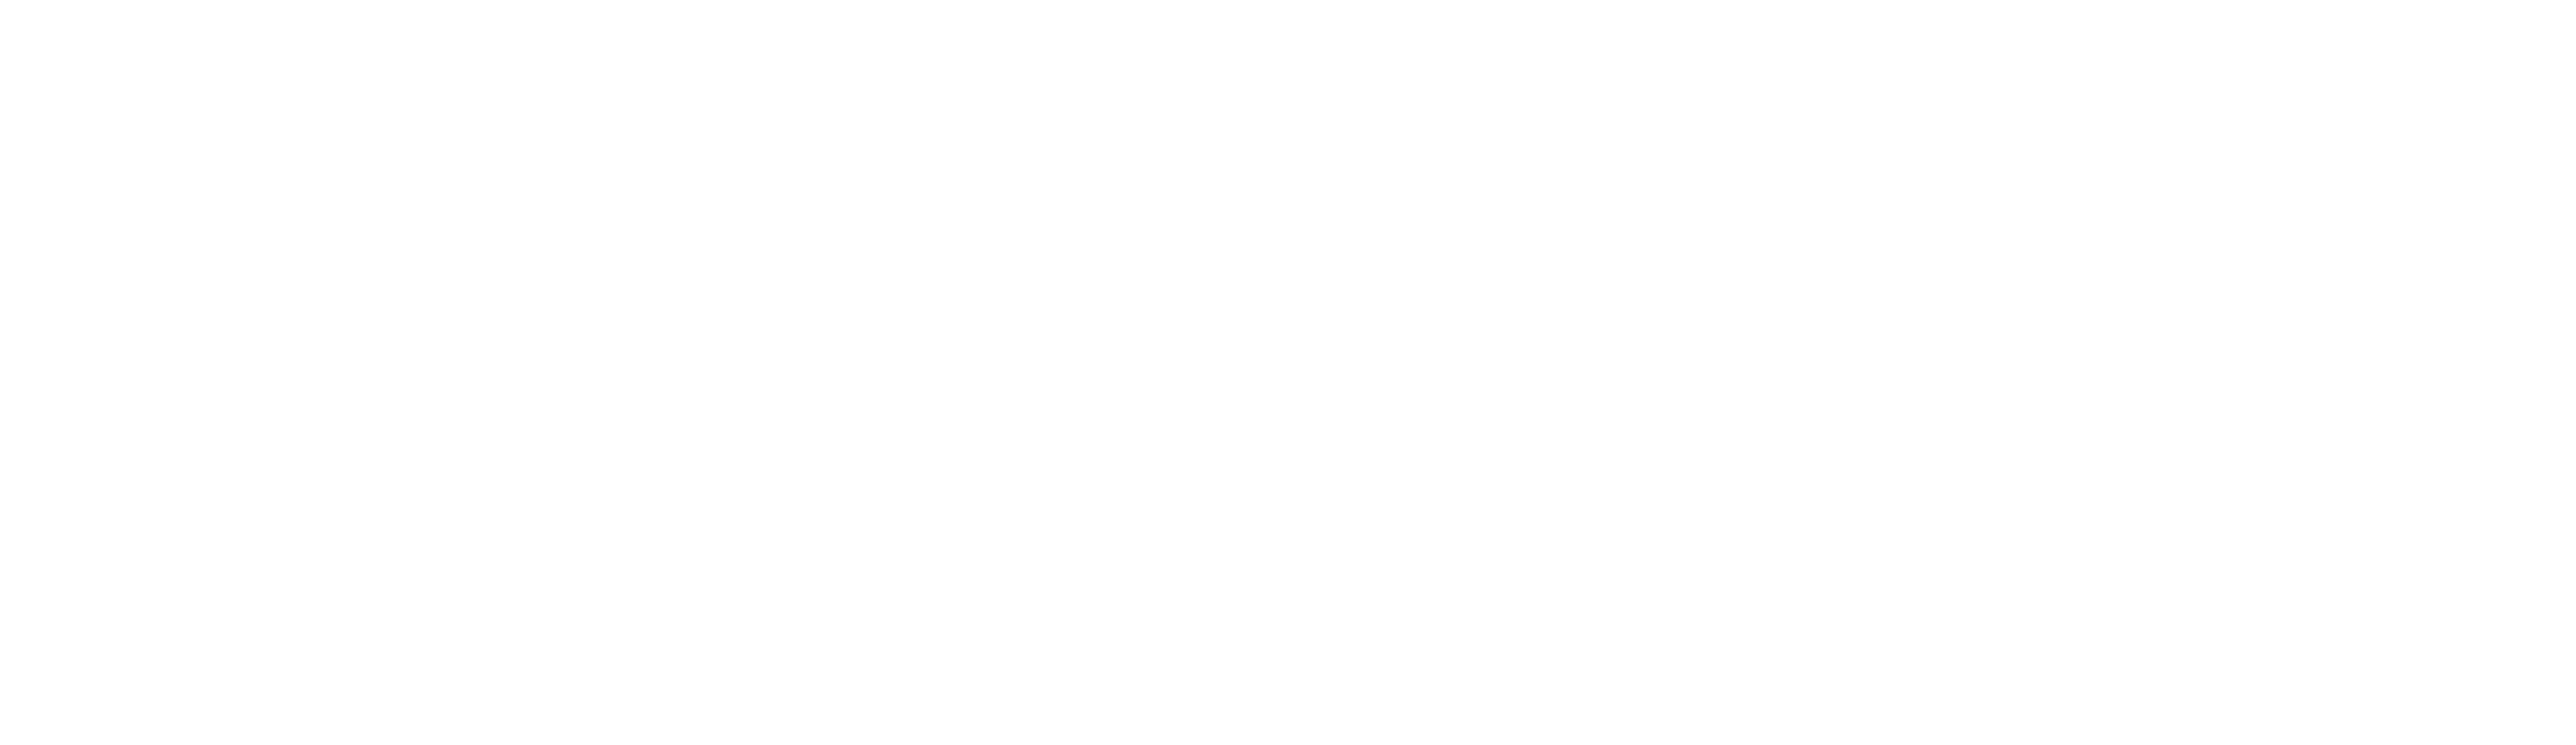 Sherwood Pest Solutions